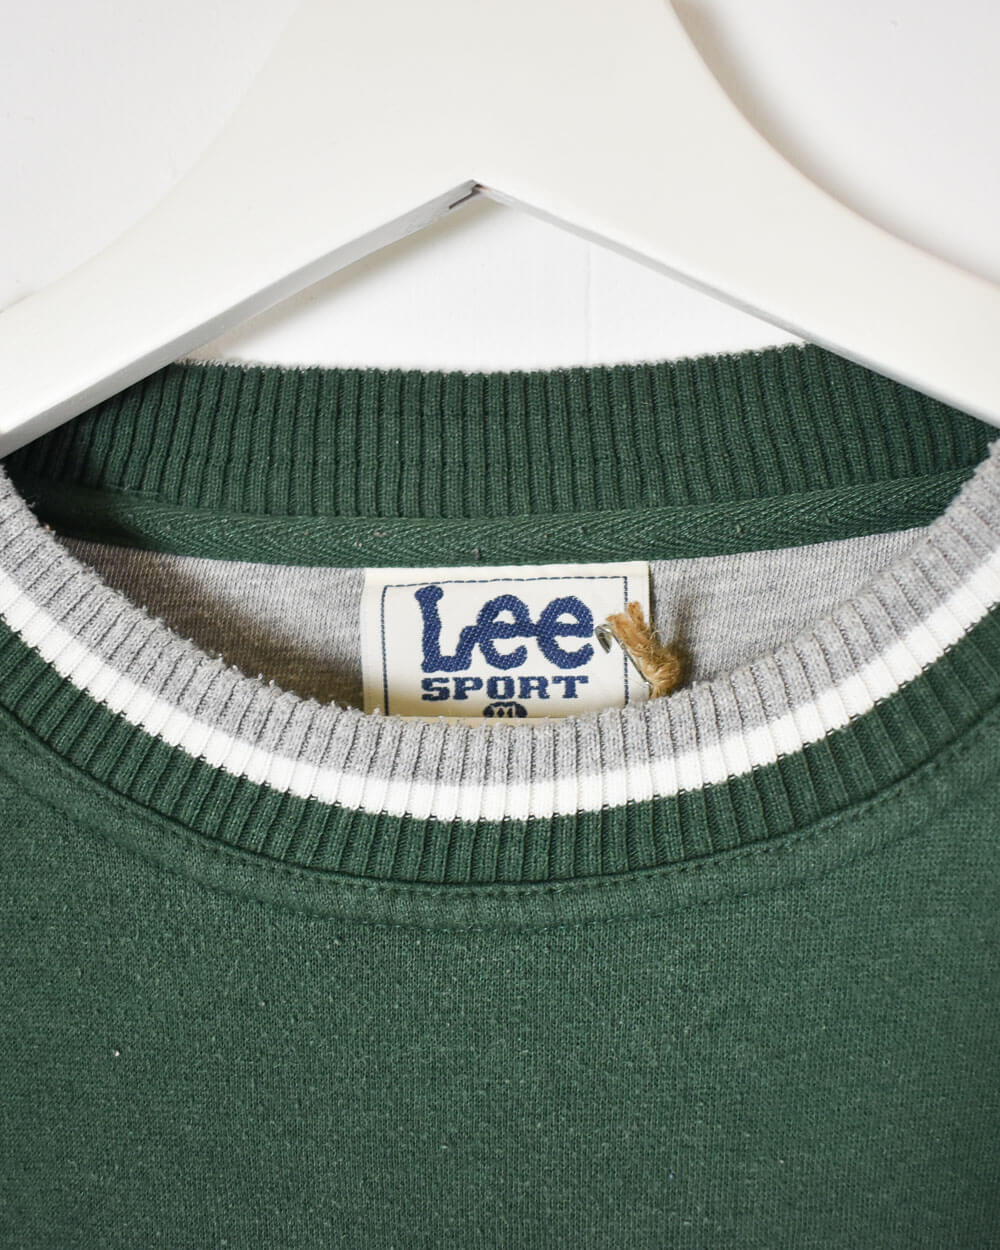 Green Lee Spartans Michigan State Sweatshirt - XX-Large